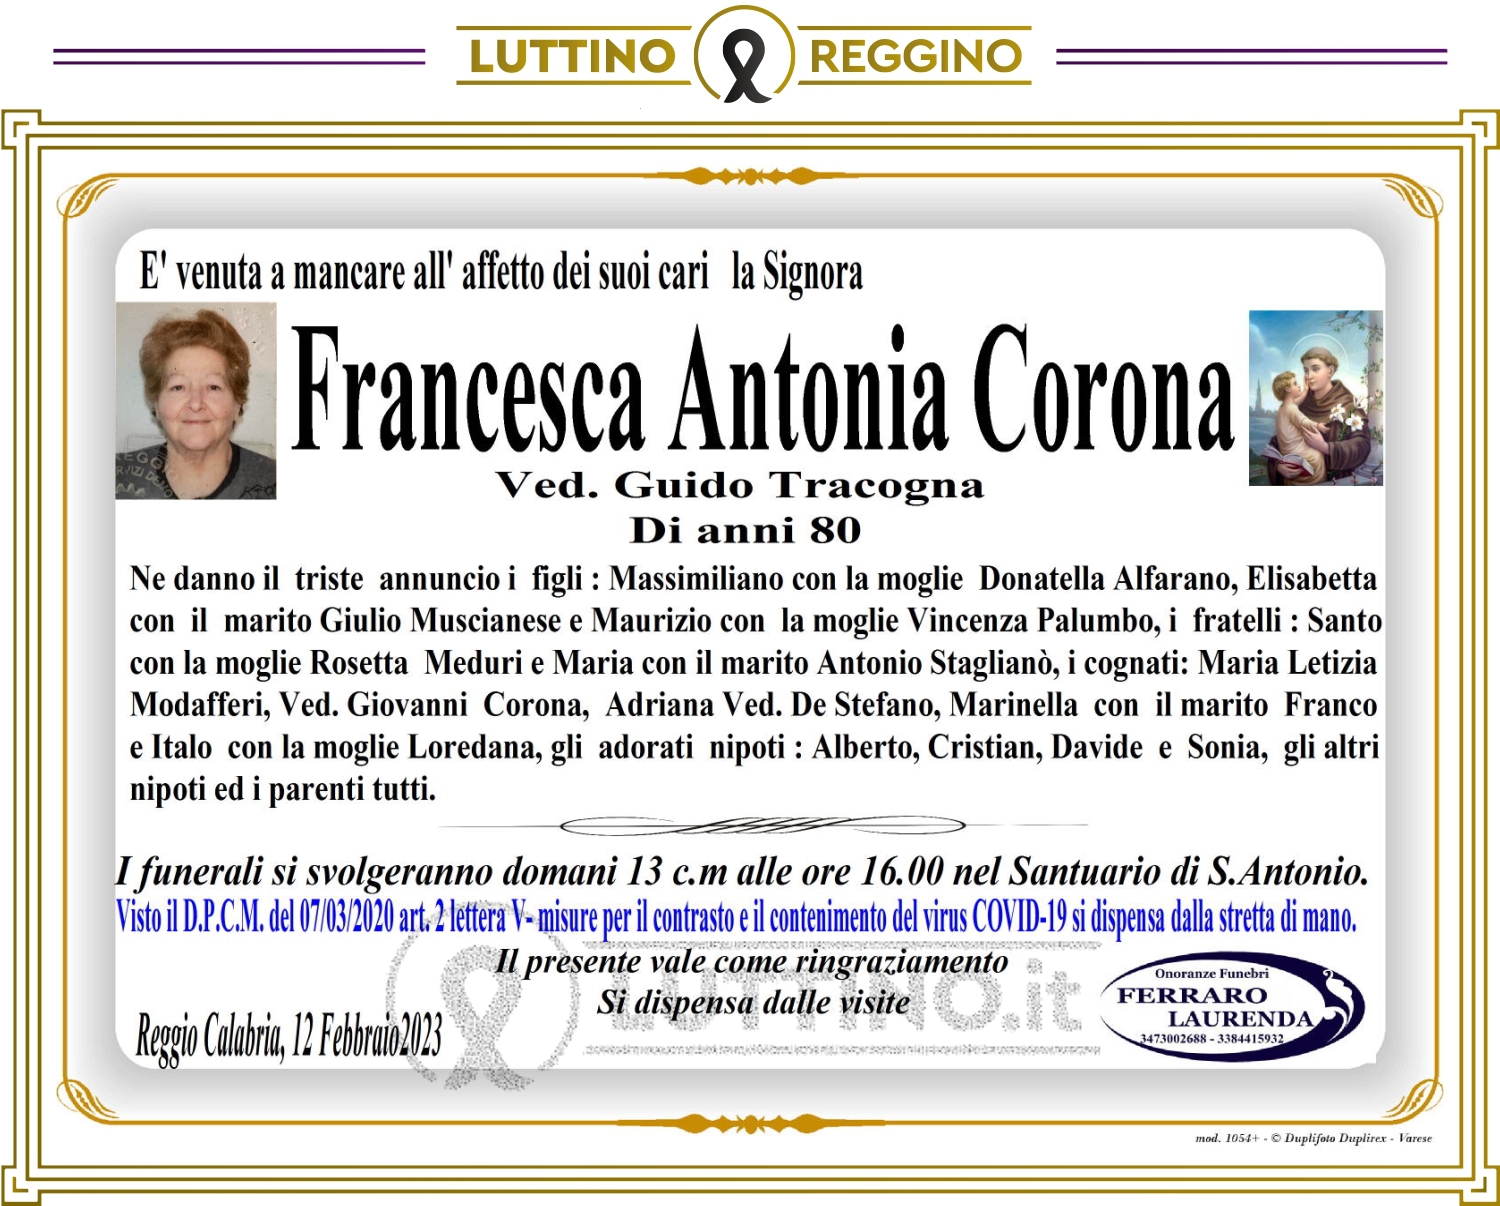 Francesca Antonia Corona